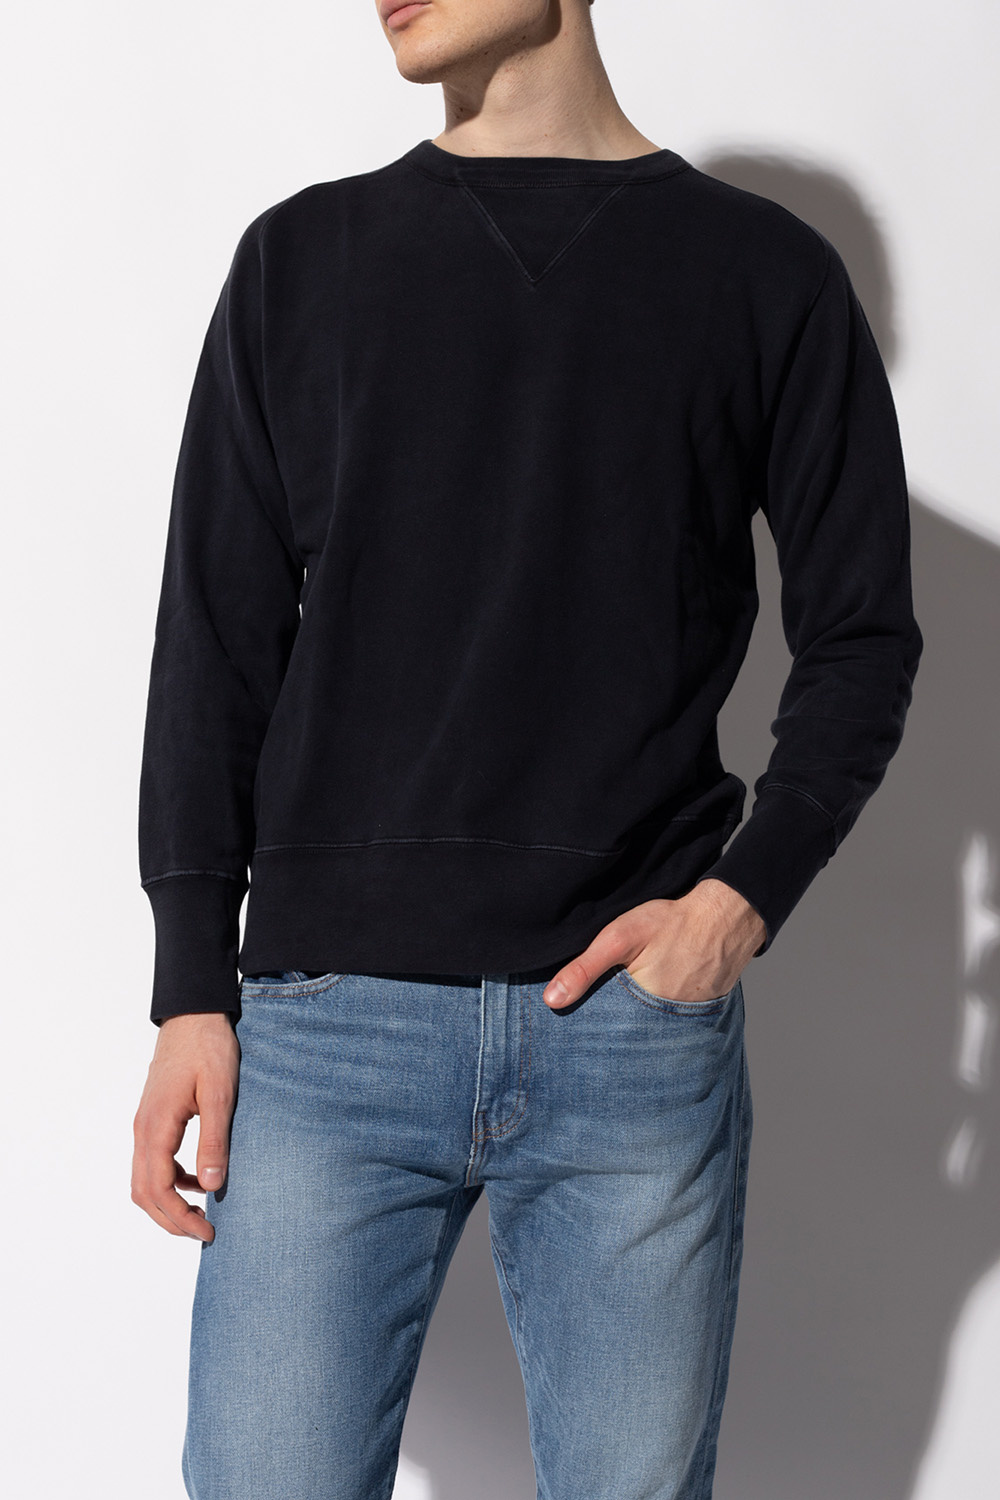 Black Sweatshirt 'Vintage Clothing' collection Levi's - Vitkac Italy